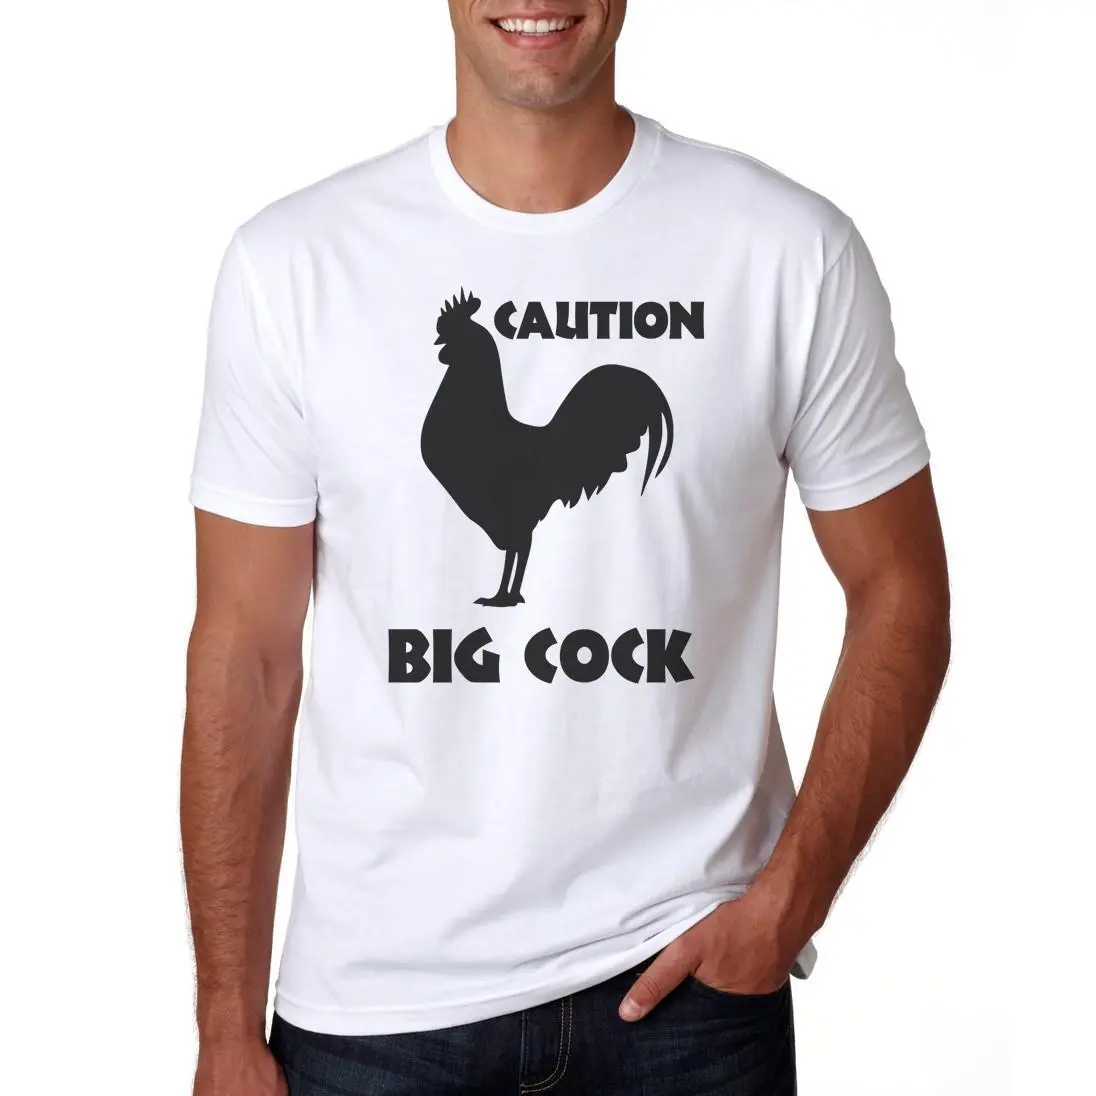 Caution Big Cock T-Shirt - Men's Funny Novelty T-Shirt Gift - Chicken